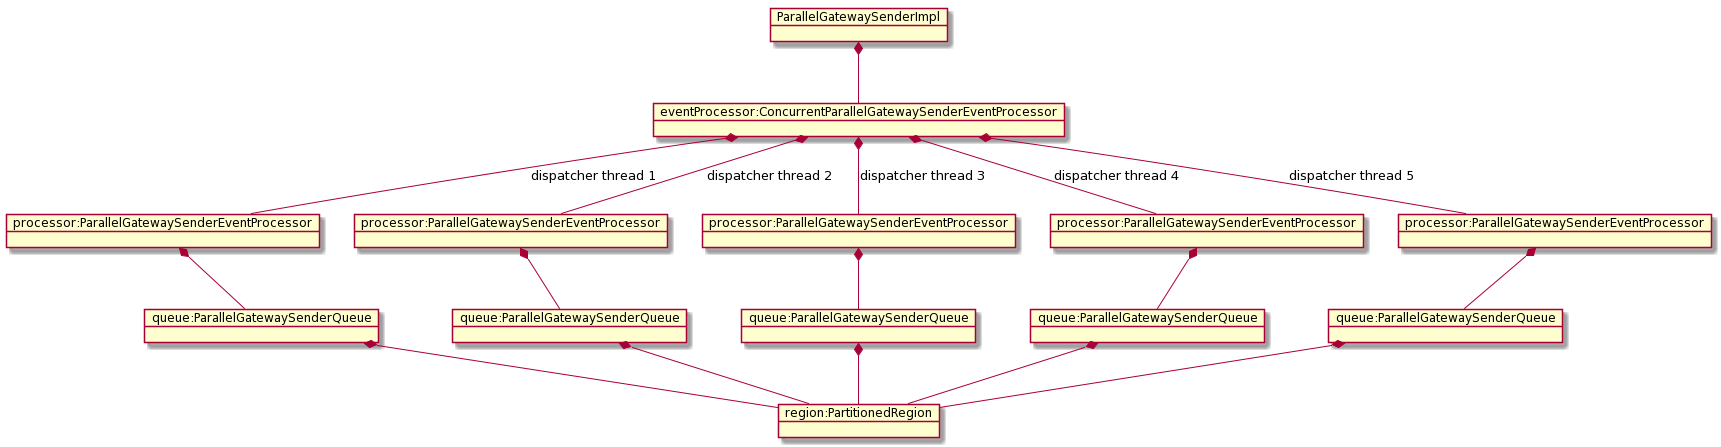 Multiple ParallelGatewaySenderEventProcessors connected to a ConcurrentParallelGatewaySenderEventProcessor inheriting from ParallelGatewaySenderImpl